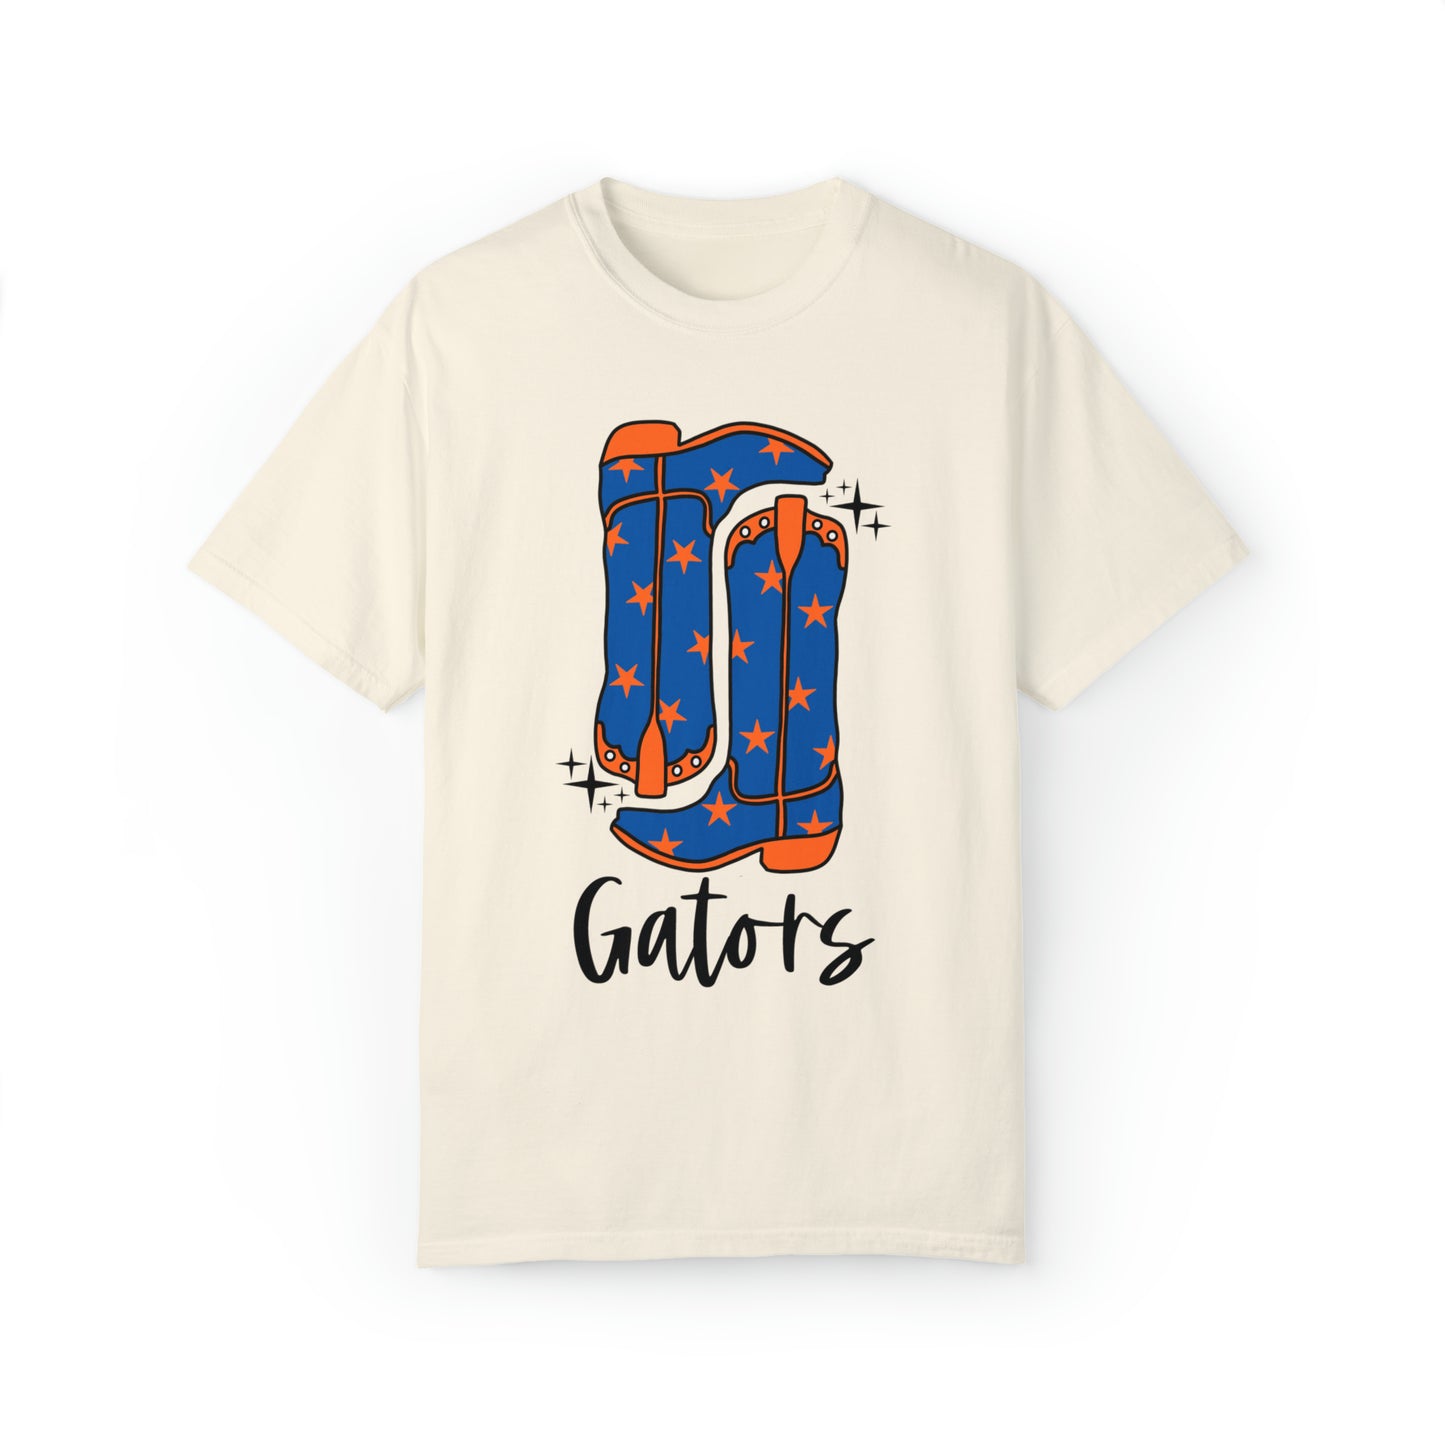 Gators Star Boots Shirt